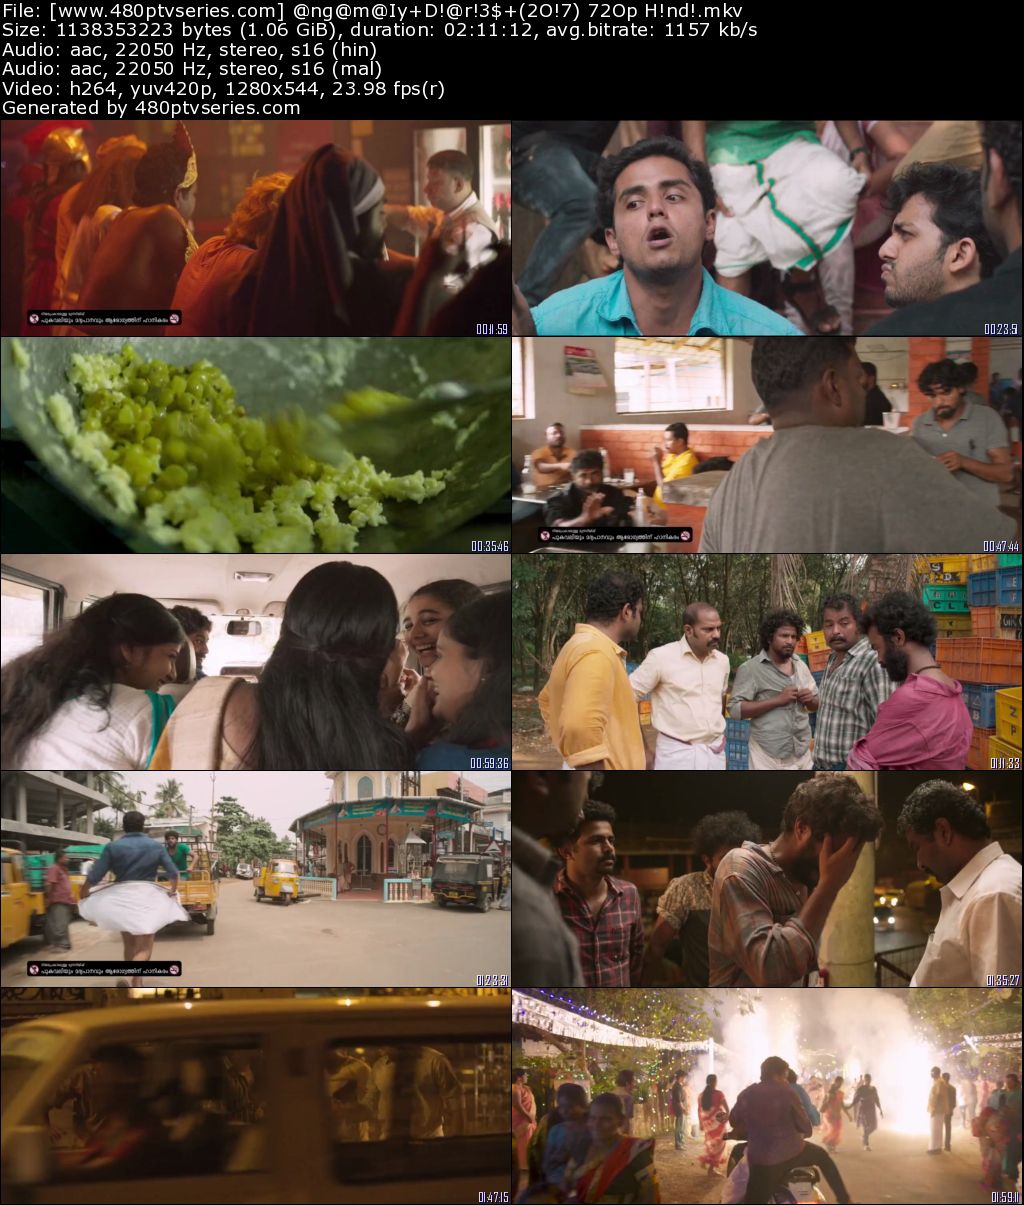 Angamaly Diaries 2017 Full Hindi Dual Audio Movie Download 720p 480p Bluray Free Watch Online Full Movie Download Worldfree4u 9xmovies